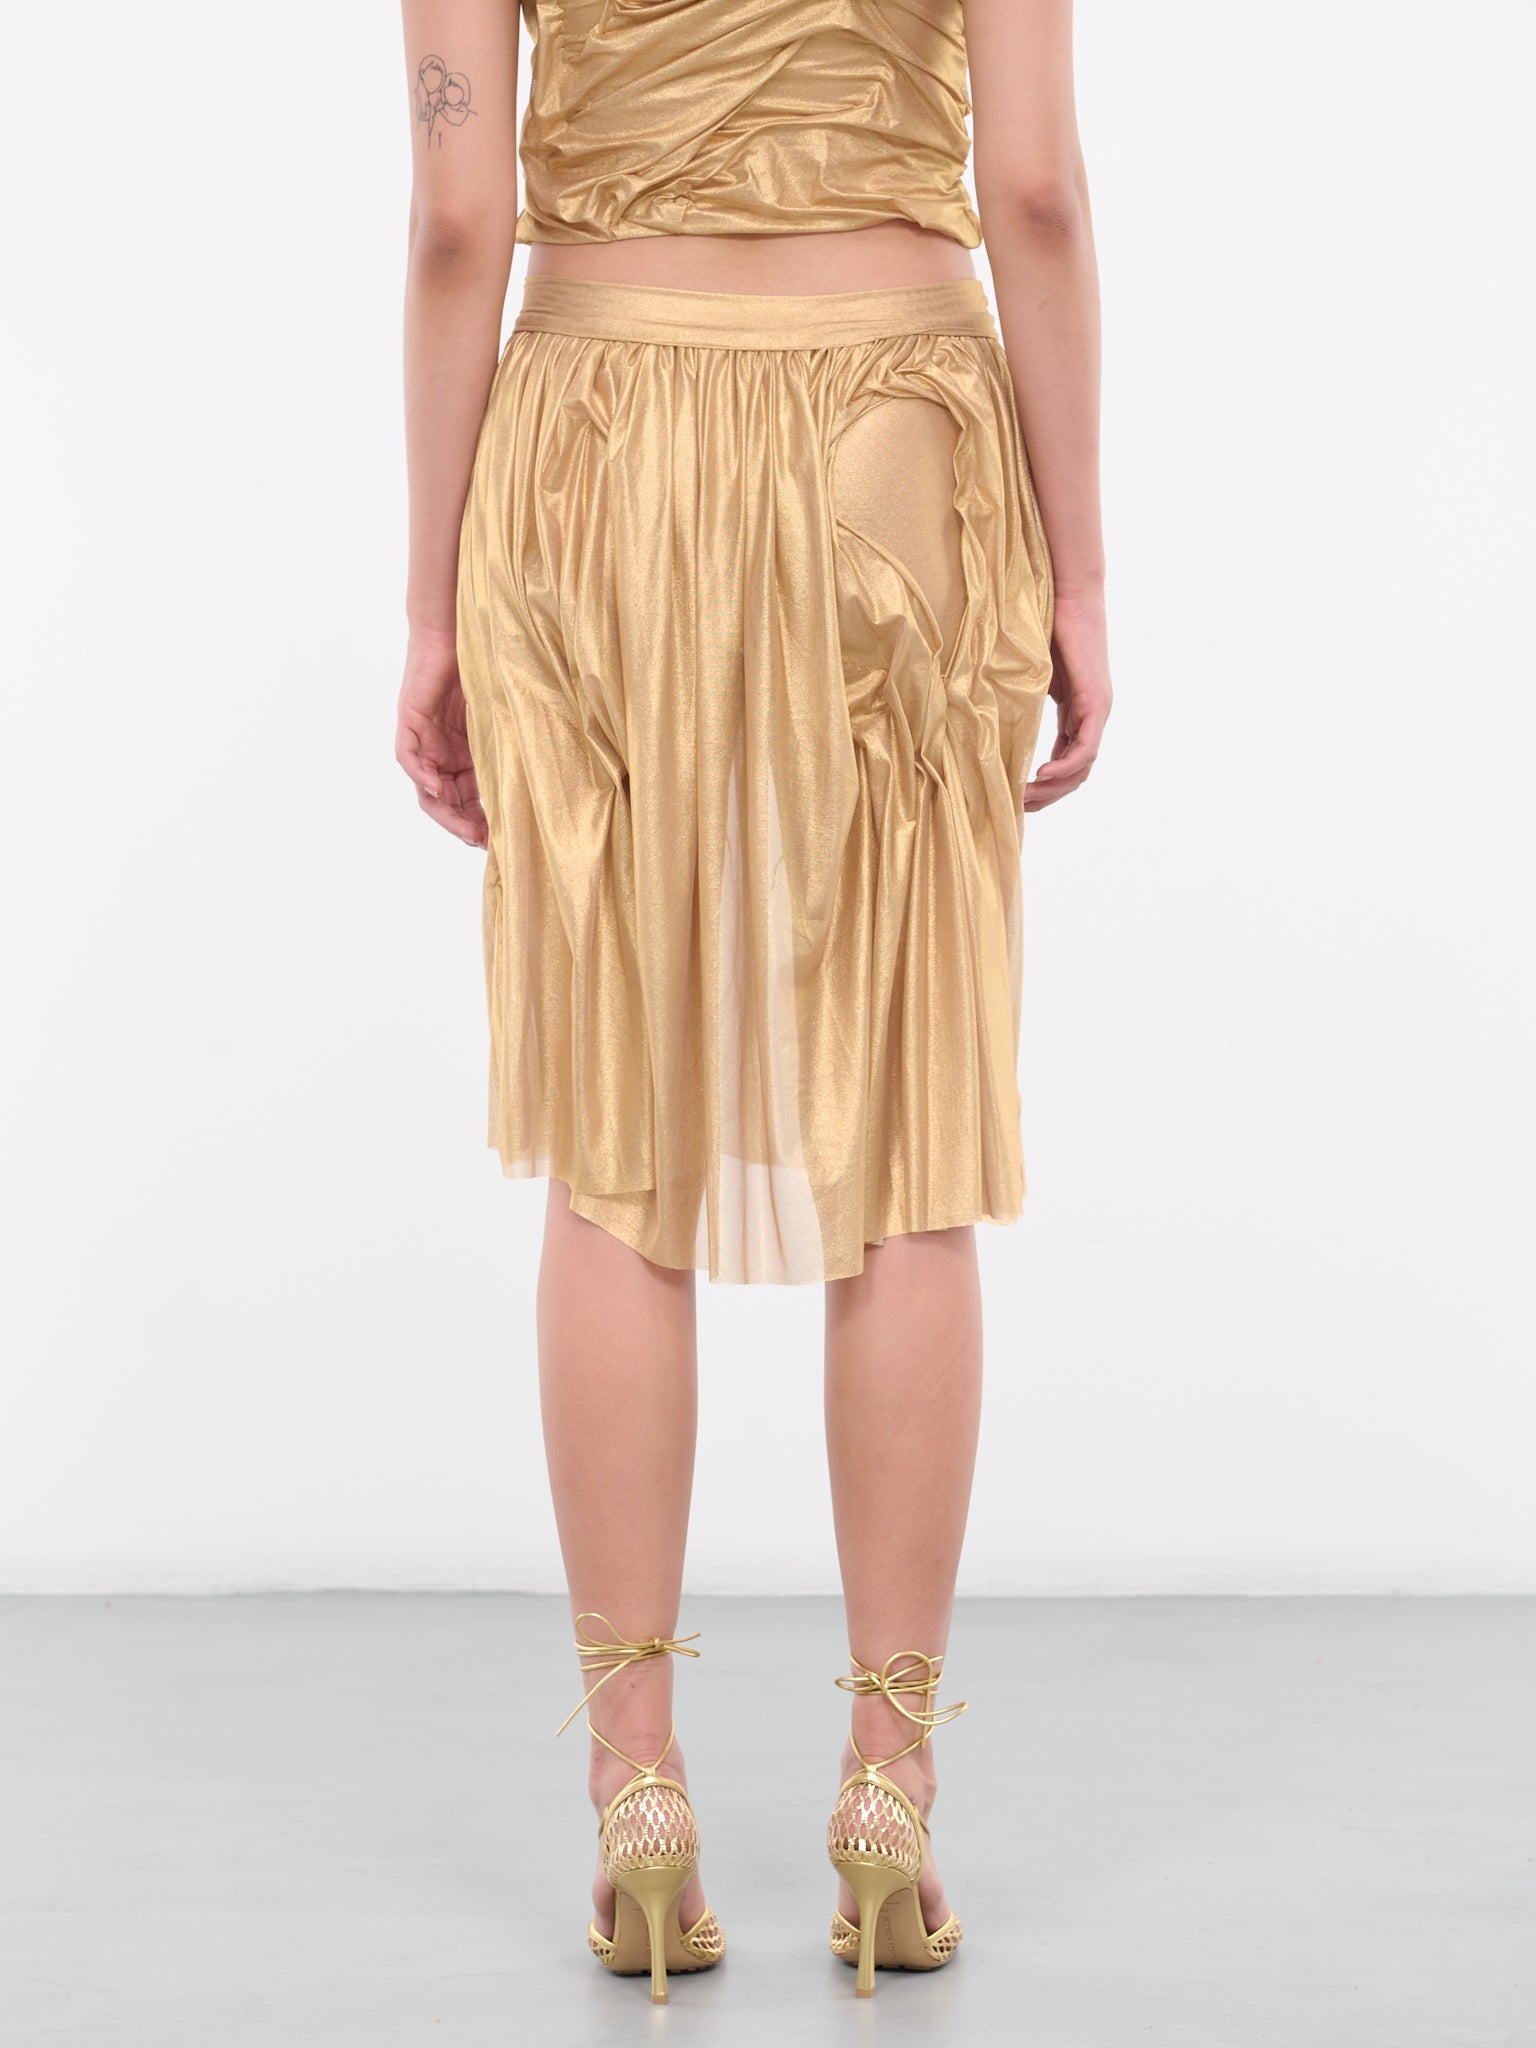 Wet Midi Skirt (WETLOOK-MIDI-GOLD)